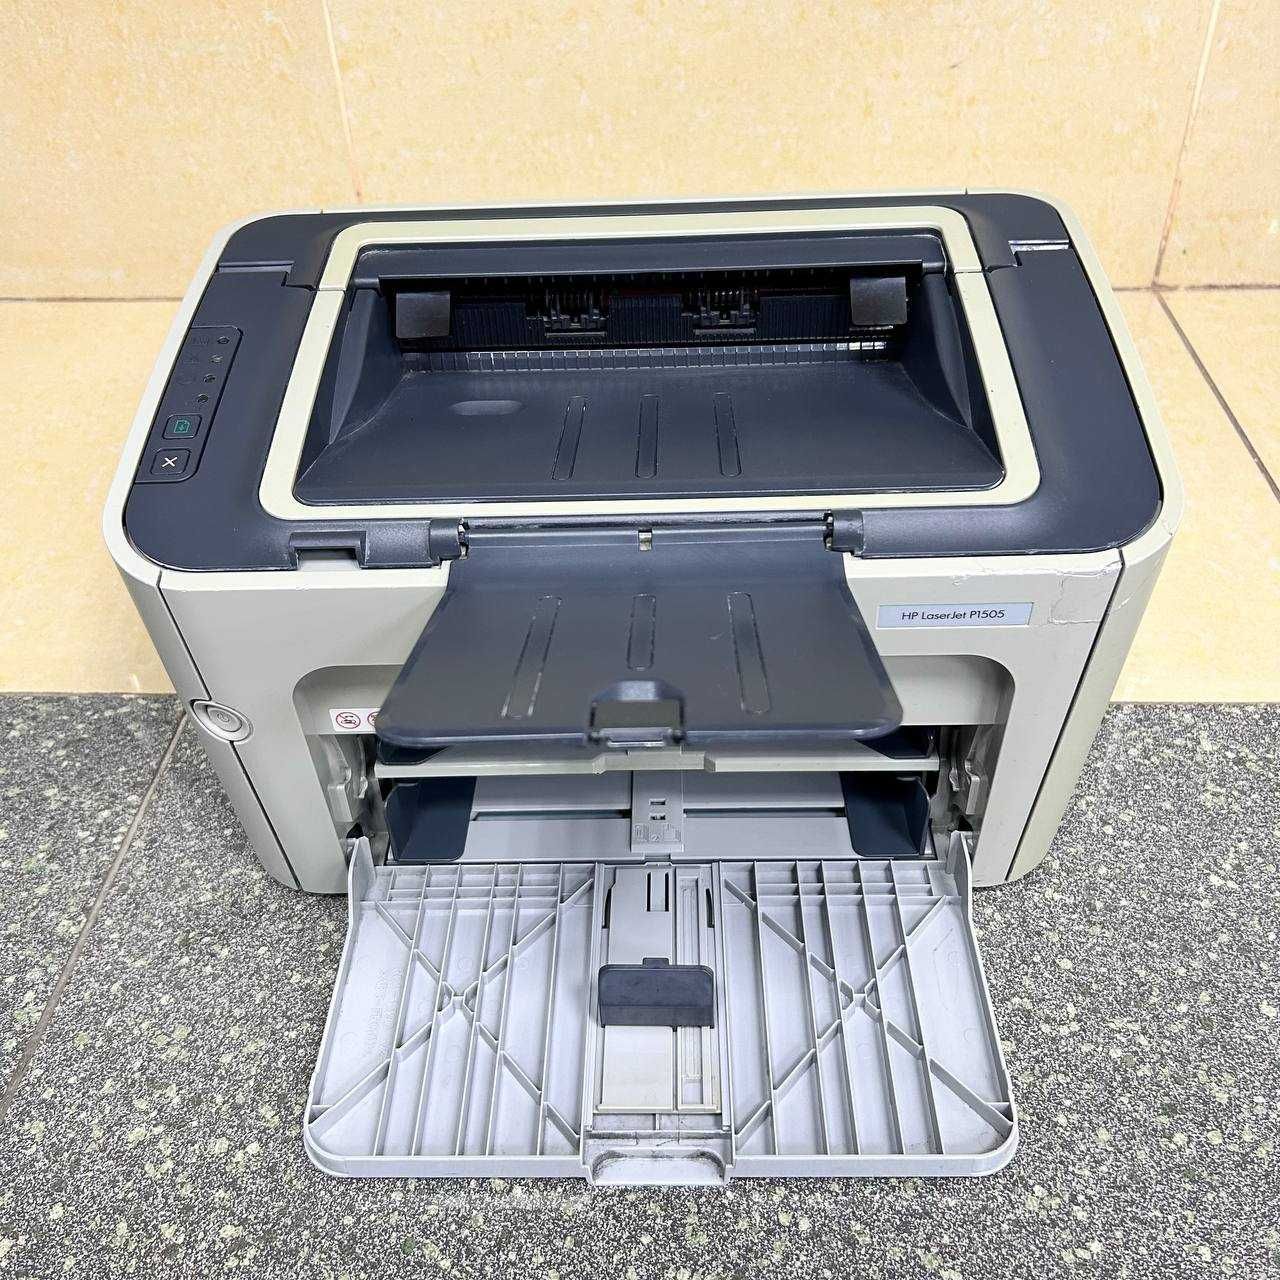 Принтер HP LASERJET P1505 с гарантией!